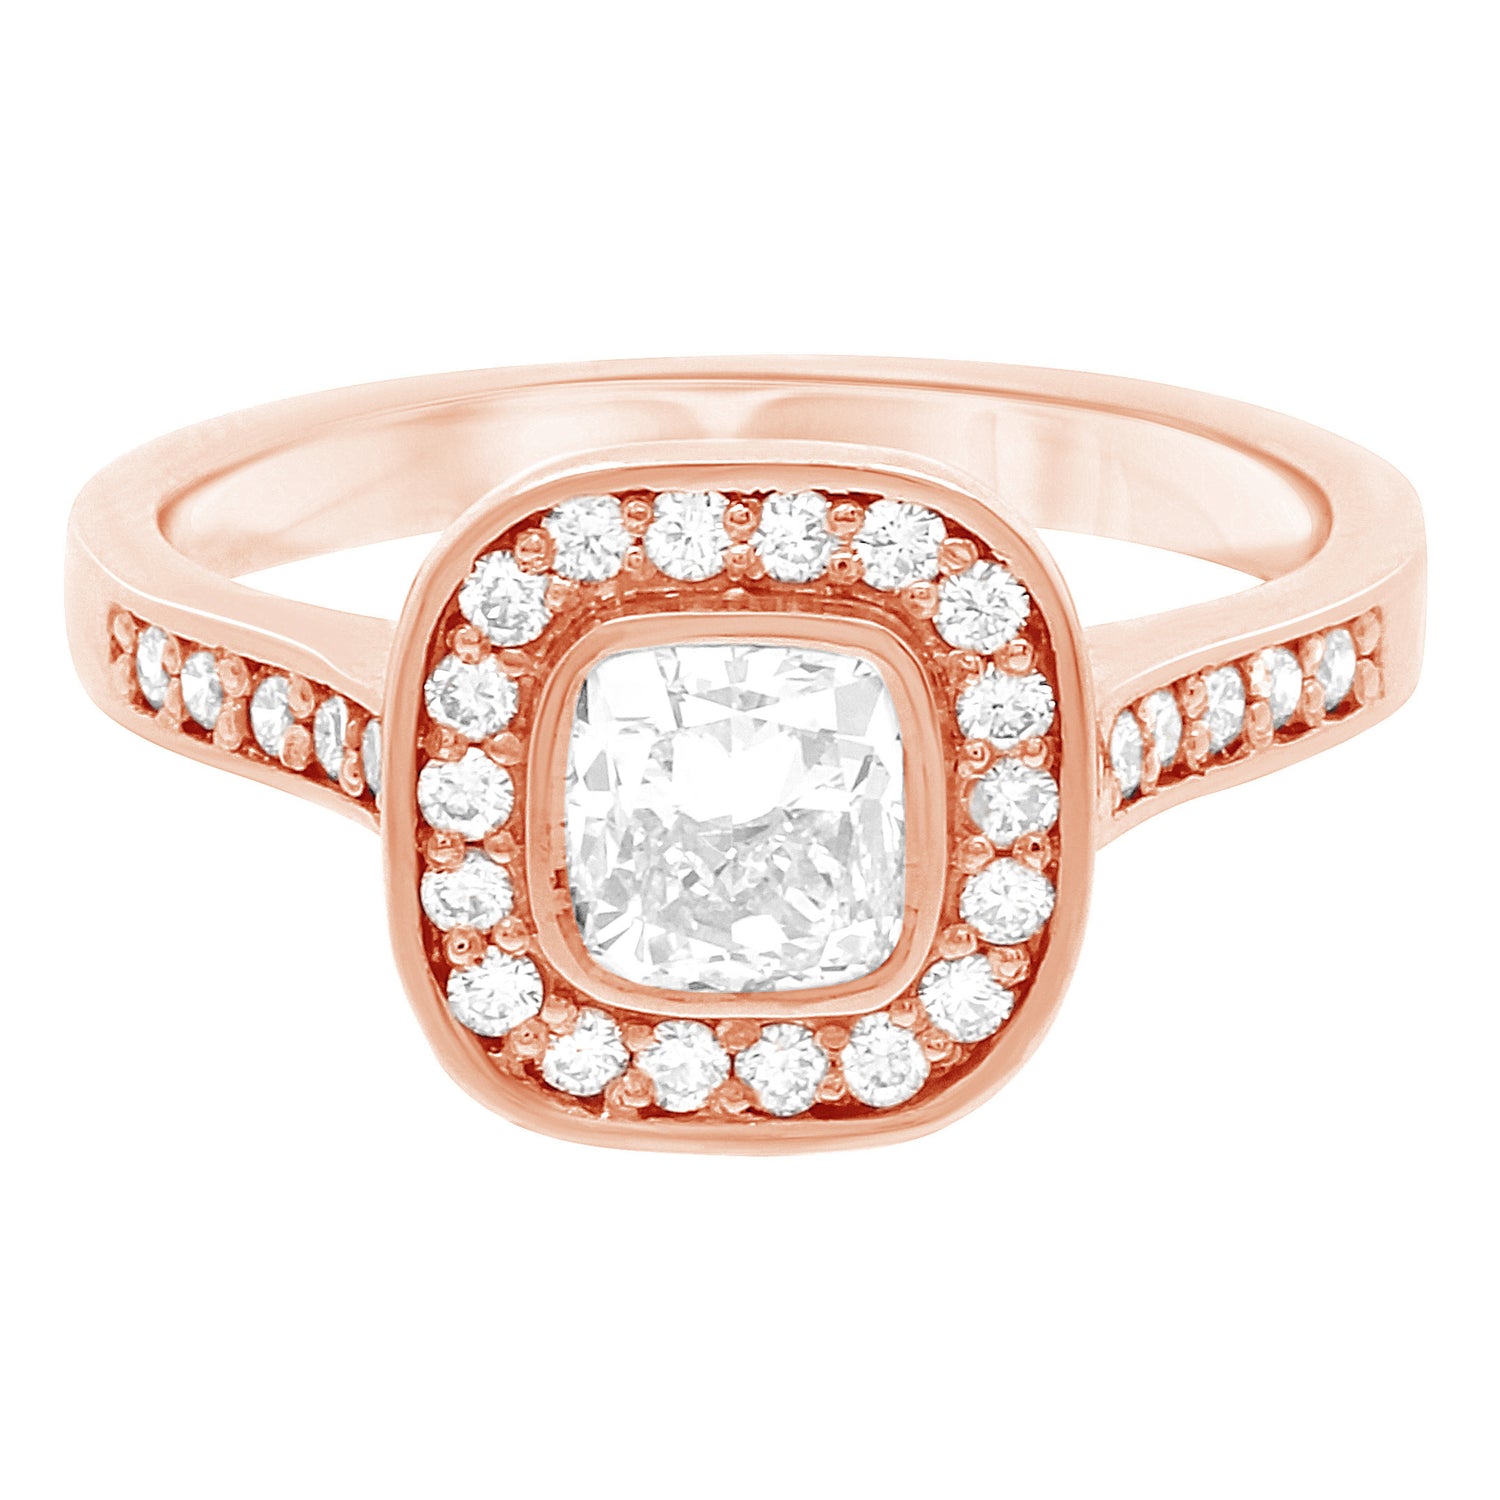 Cushion Cut Bezel Diamond Ring in rose gold